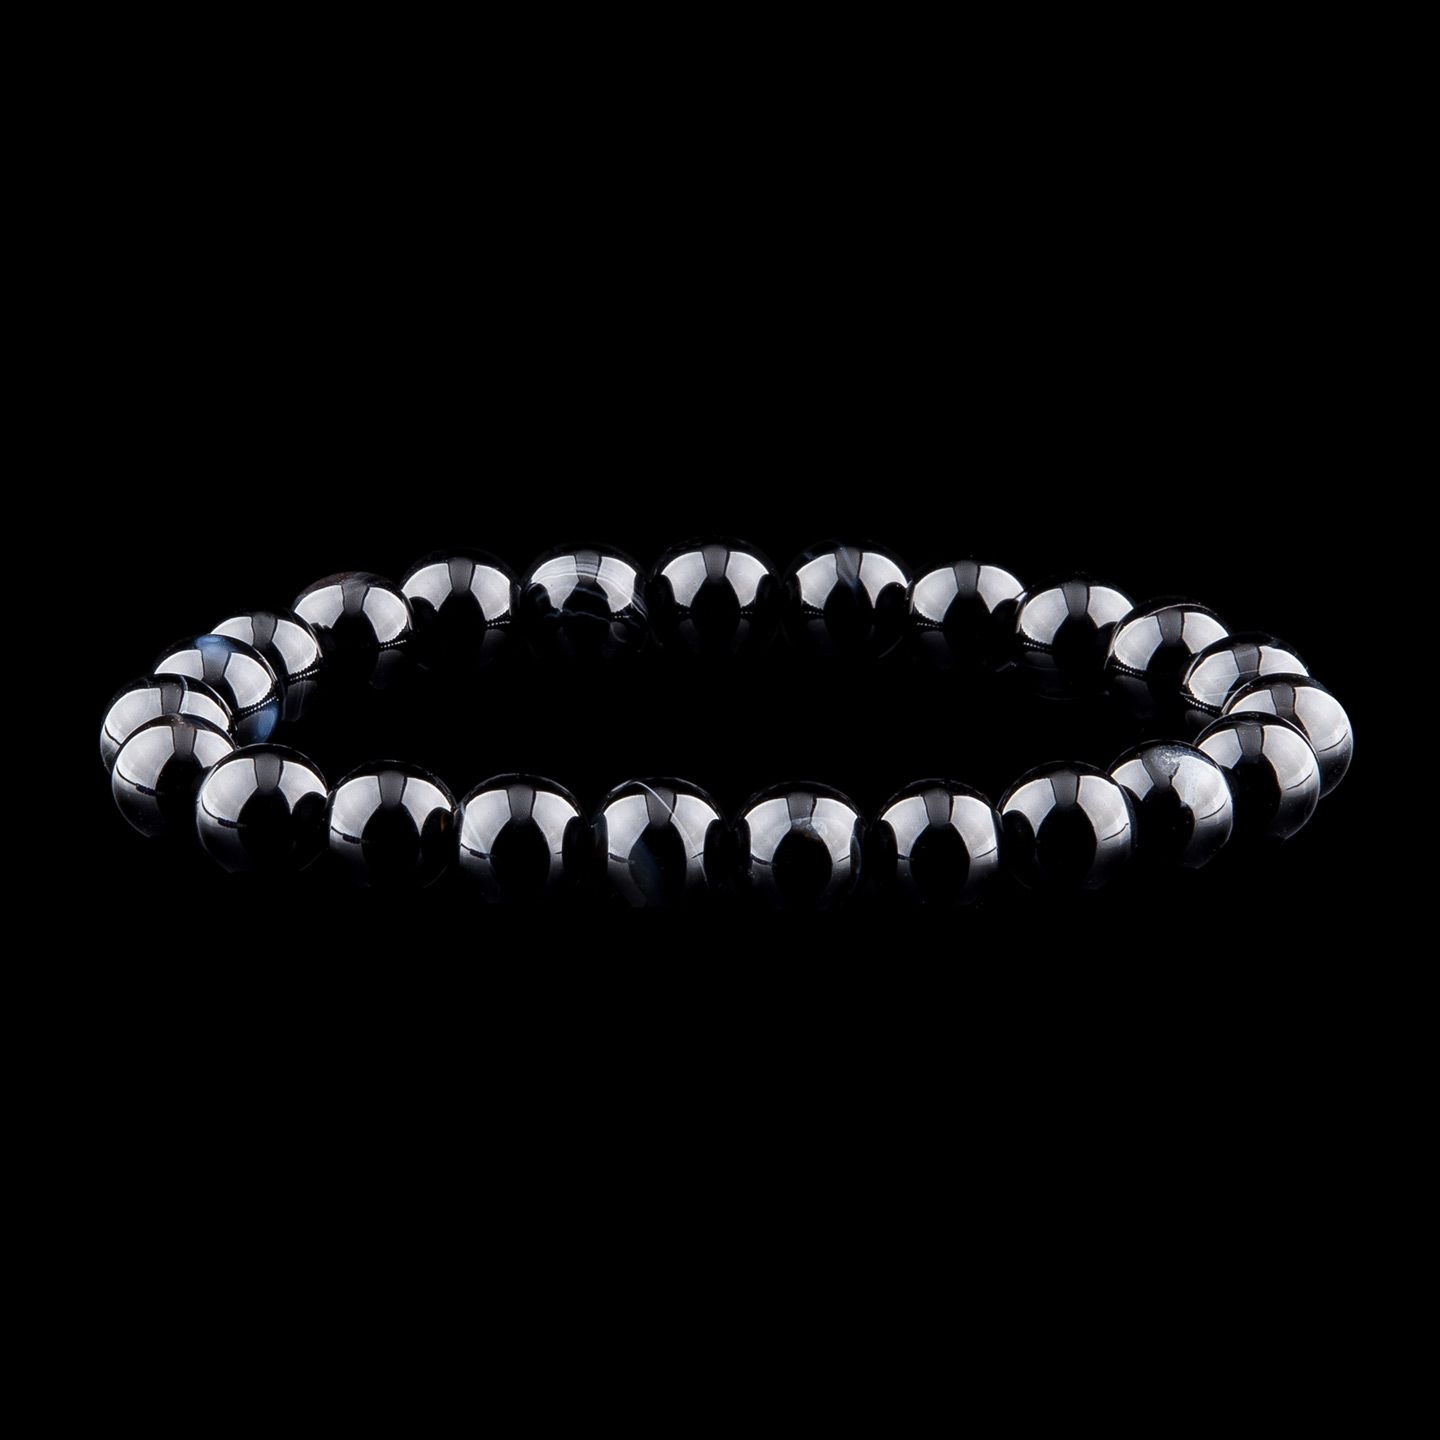 Black Agate bead bracelet Thailand